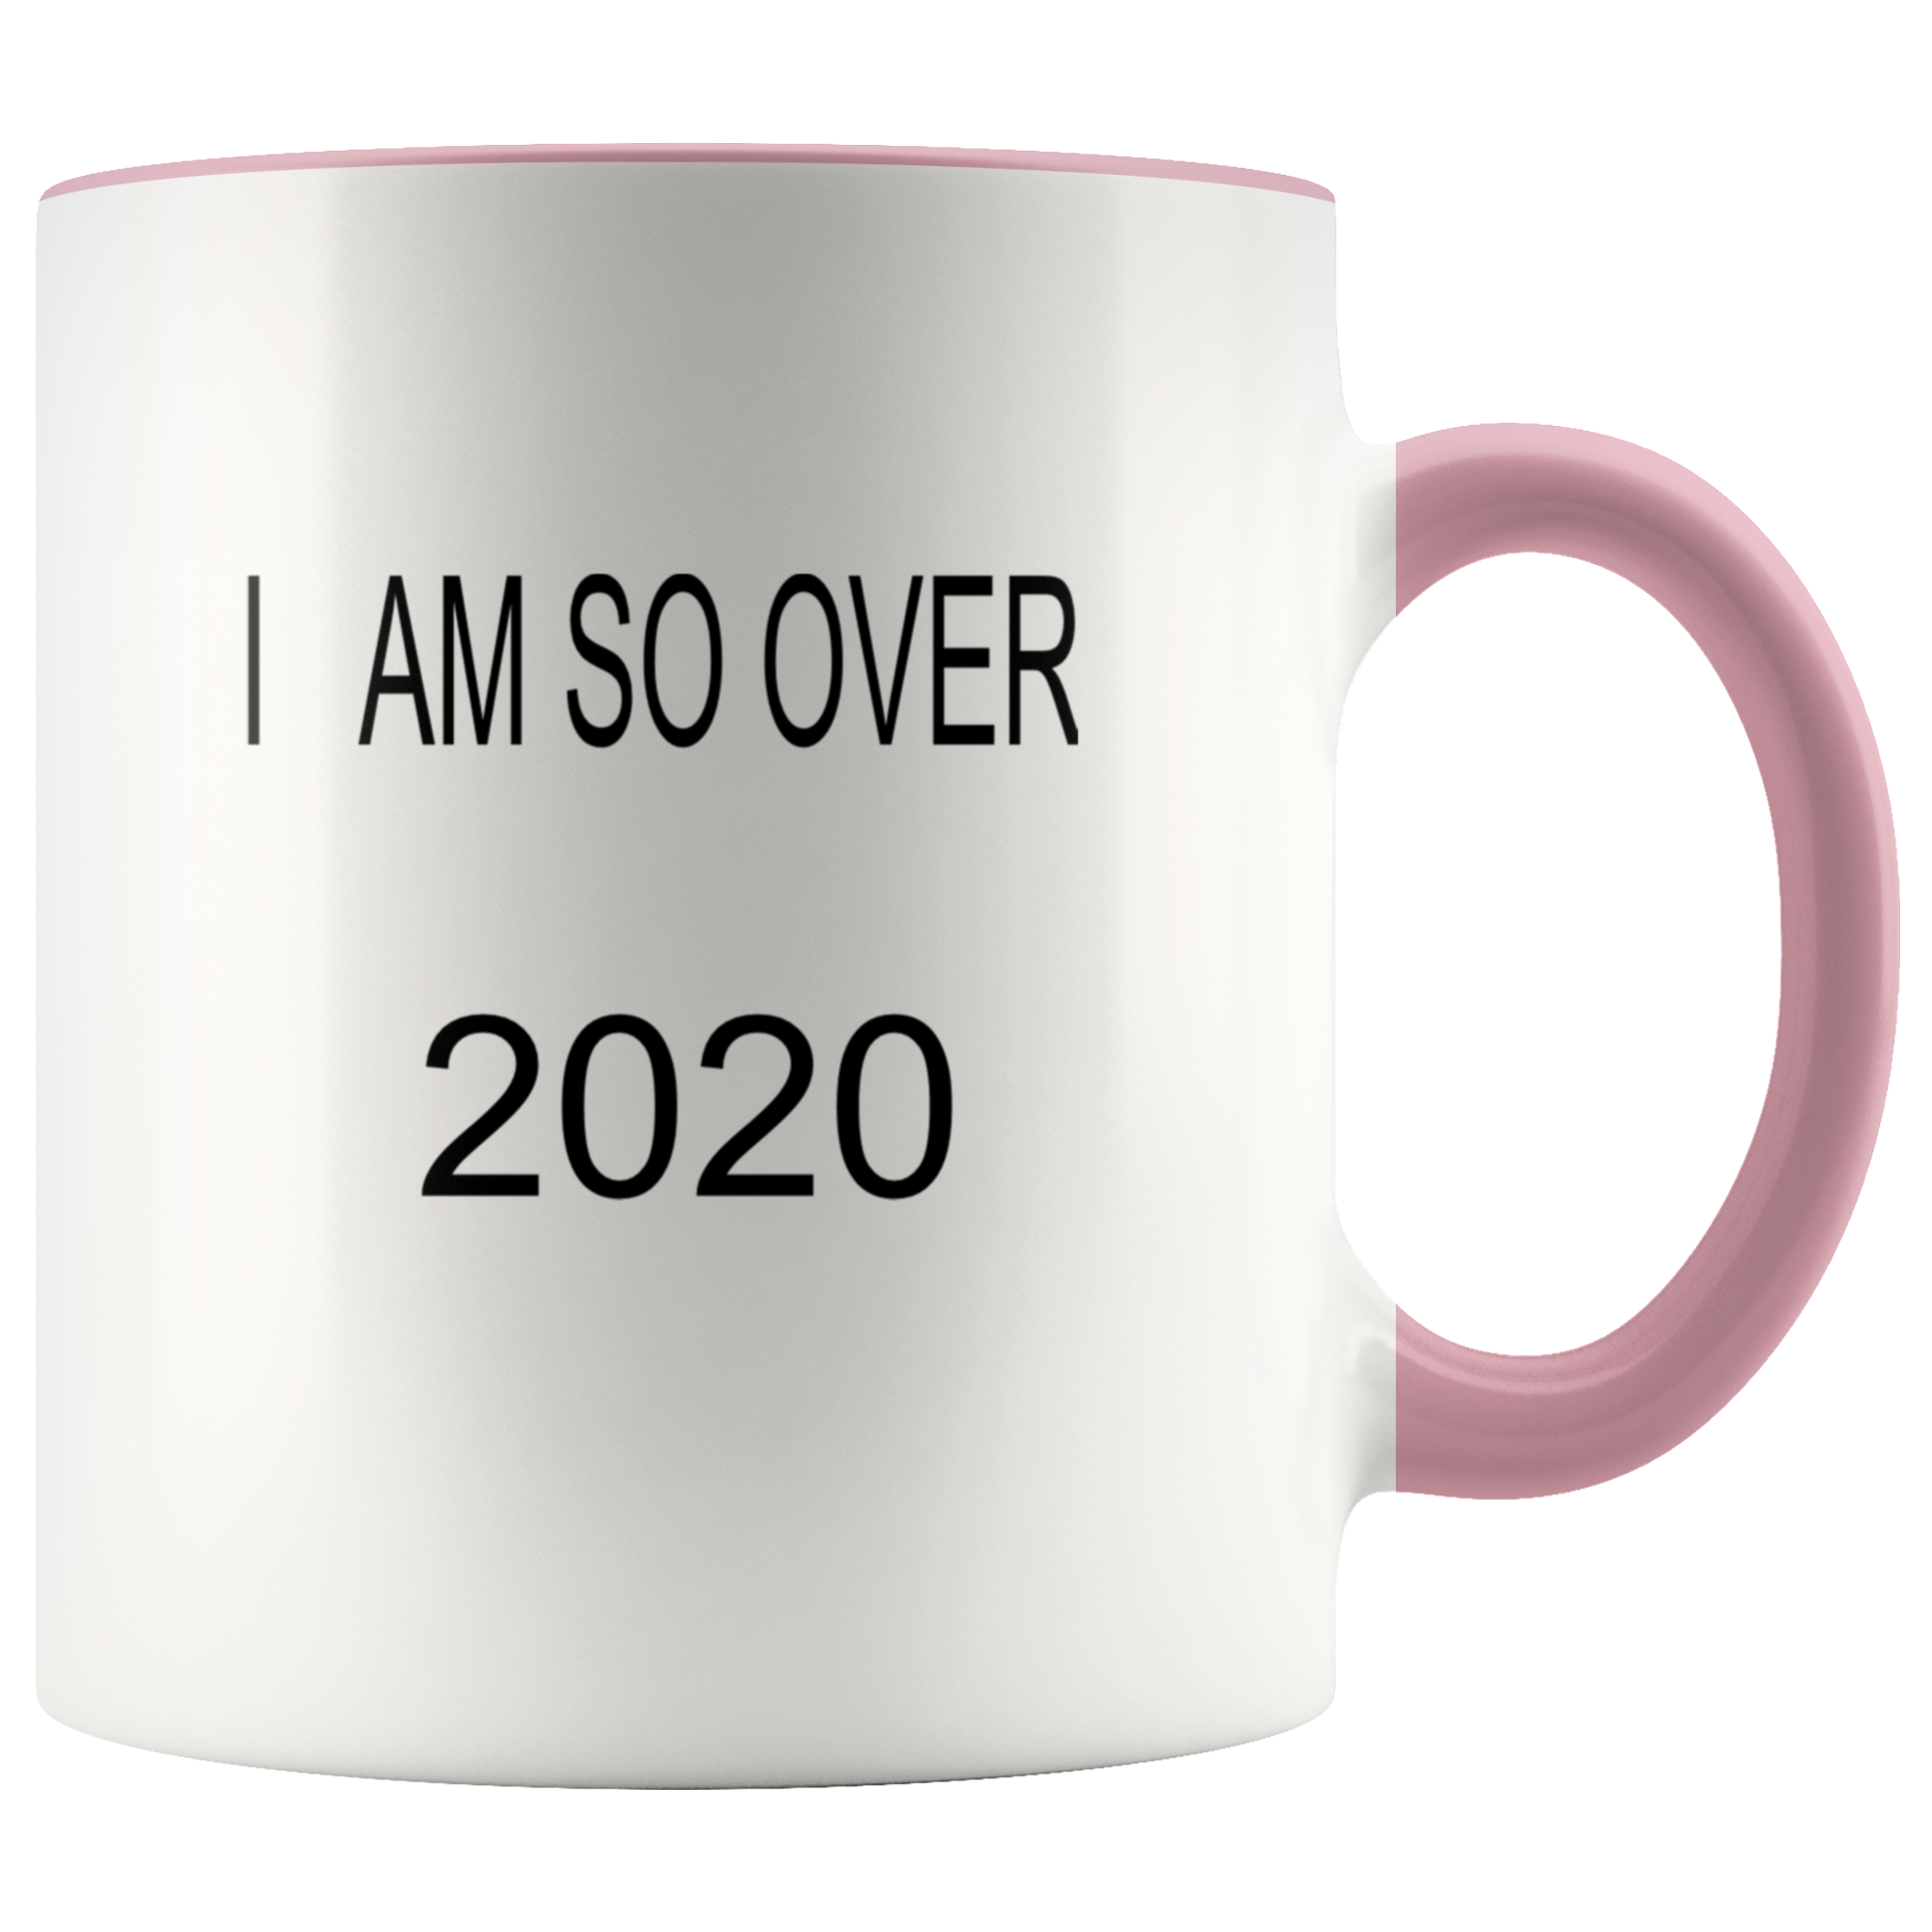 I am so over 2020 accent coffee mug 11 ounce size